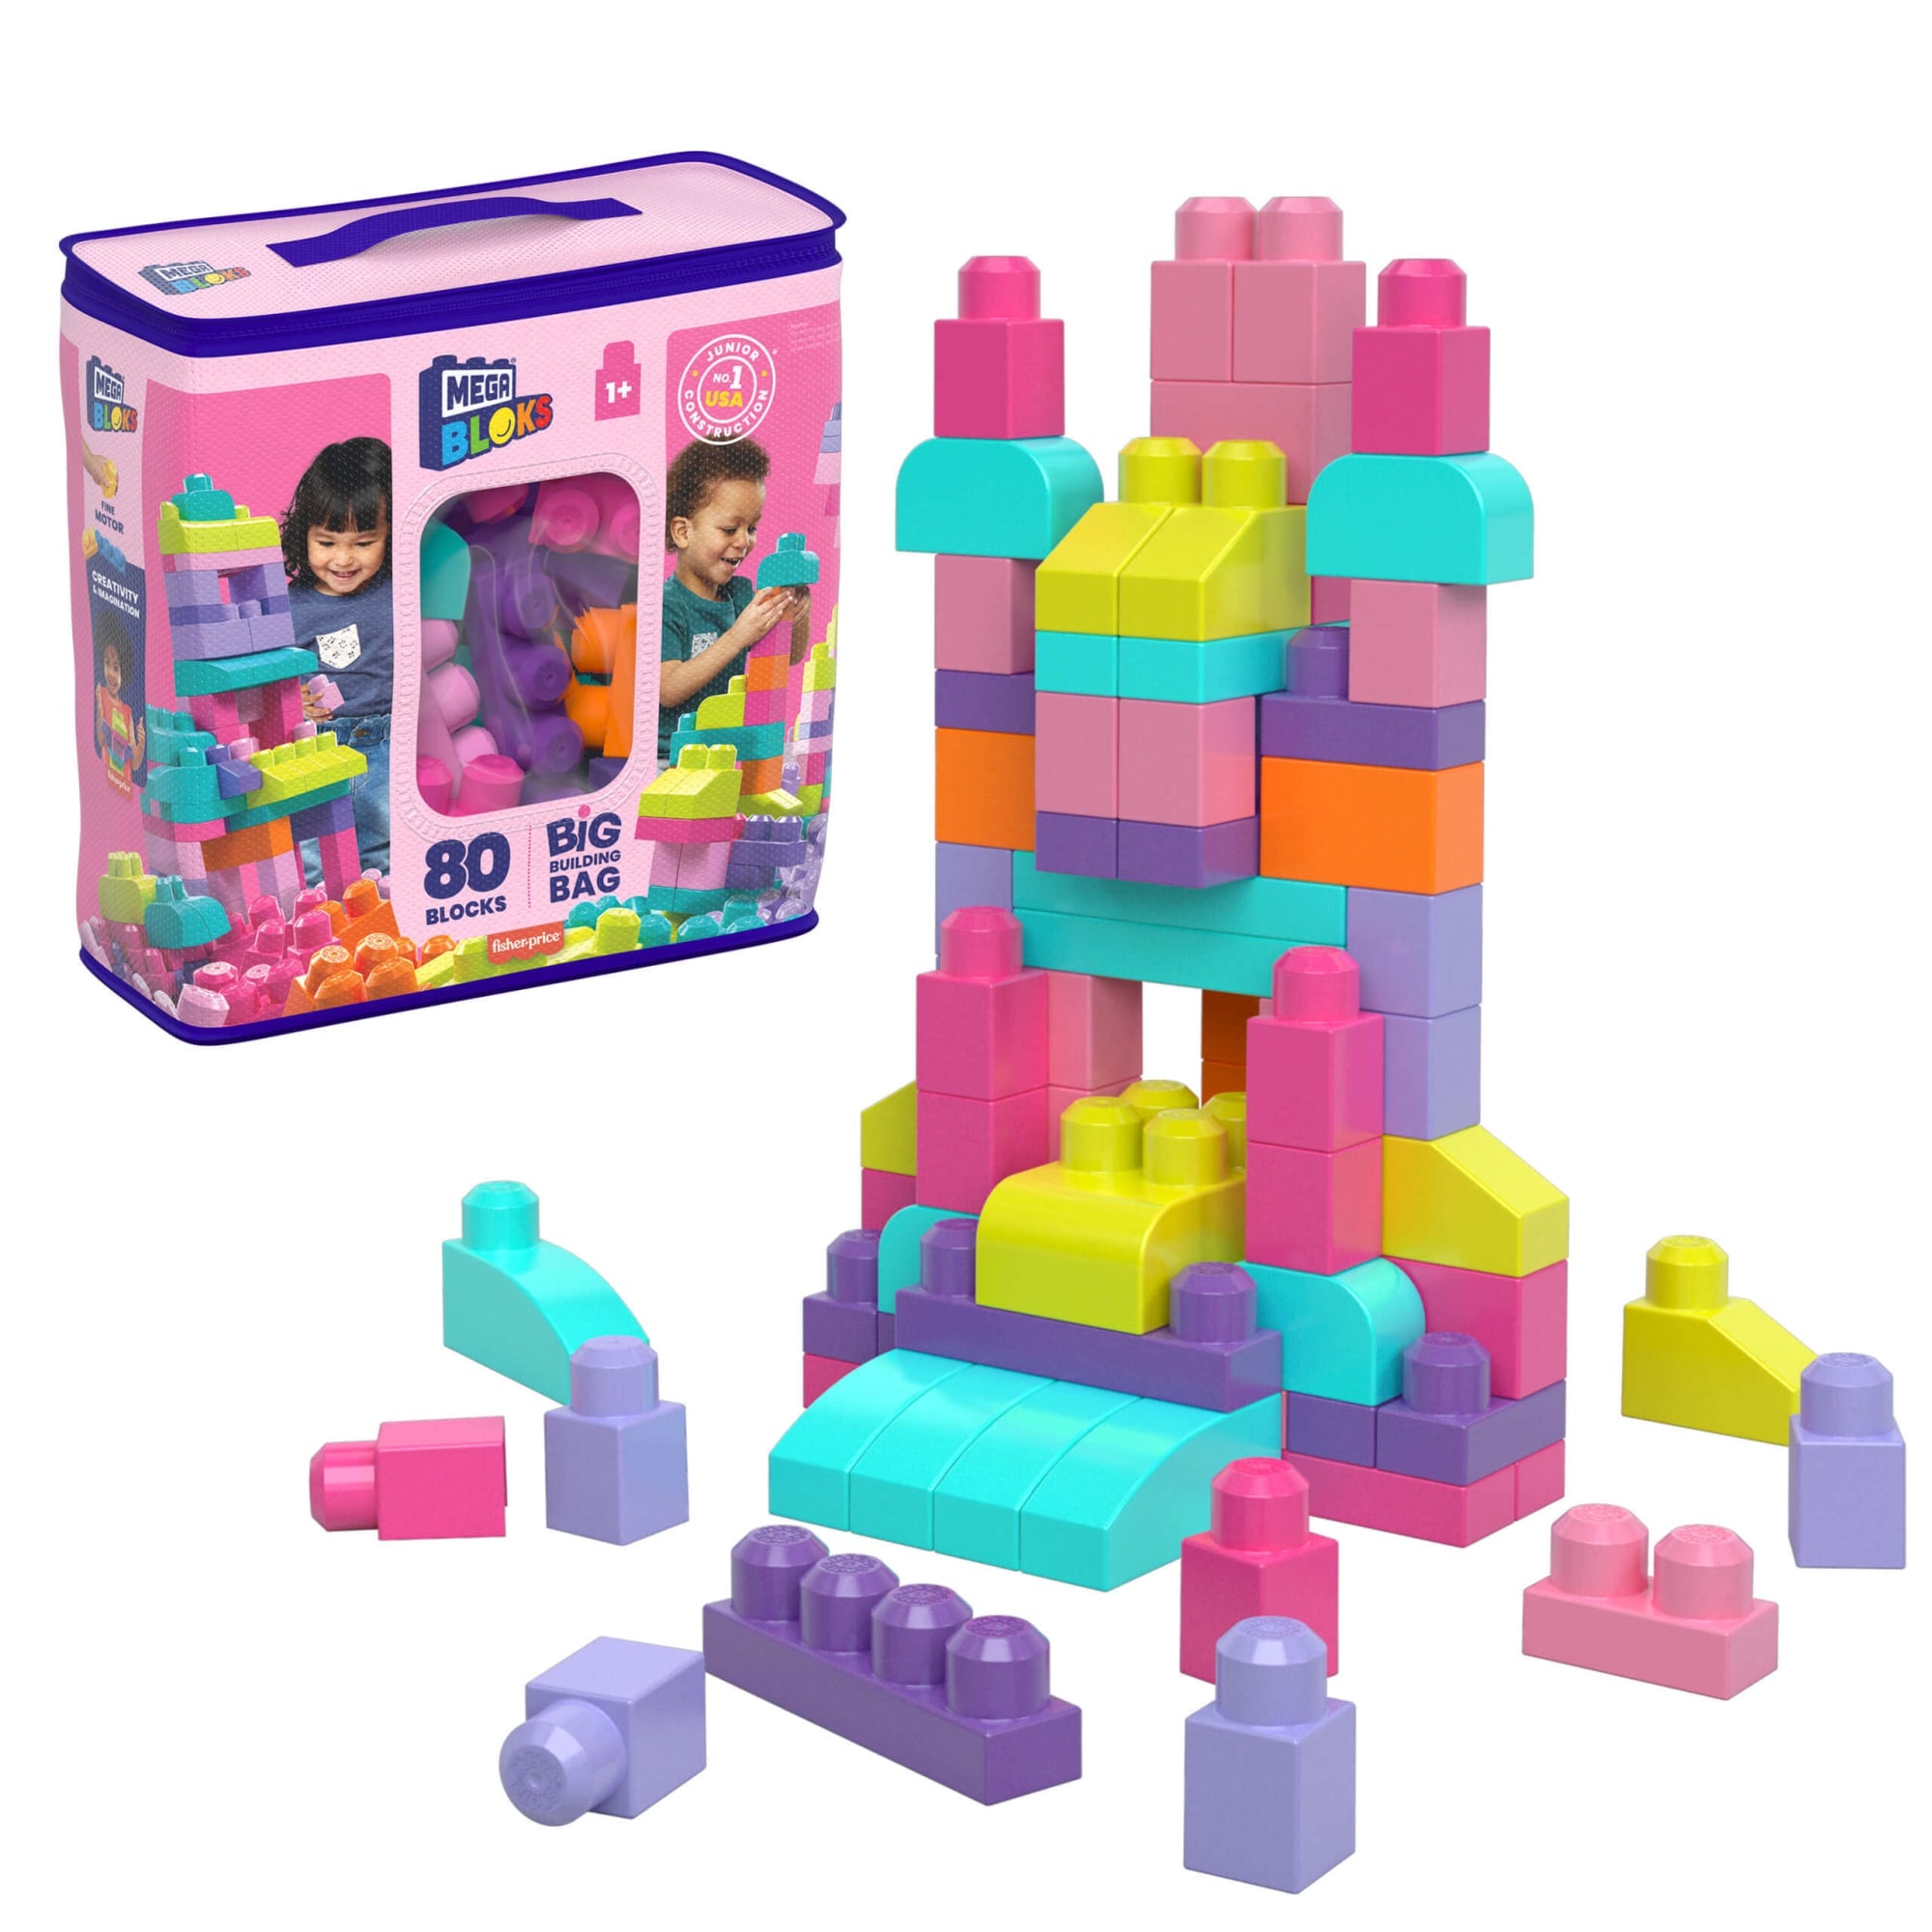 Mega Bloks Sac rose 80 briques | Mattel